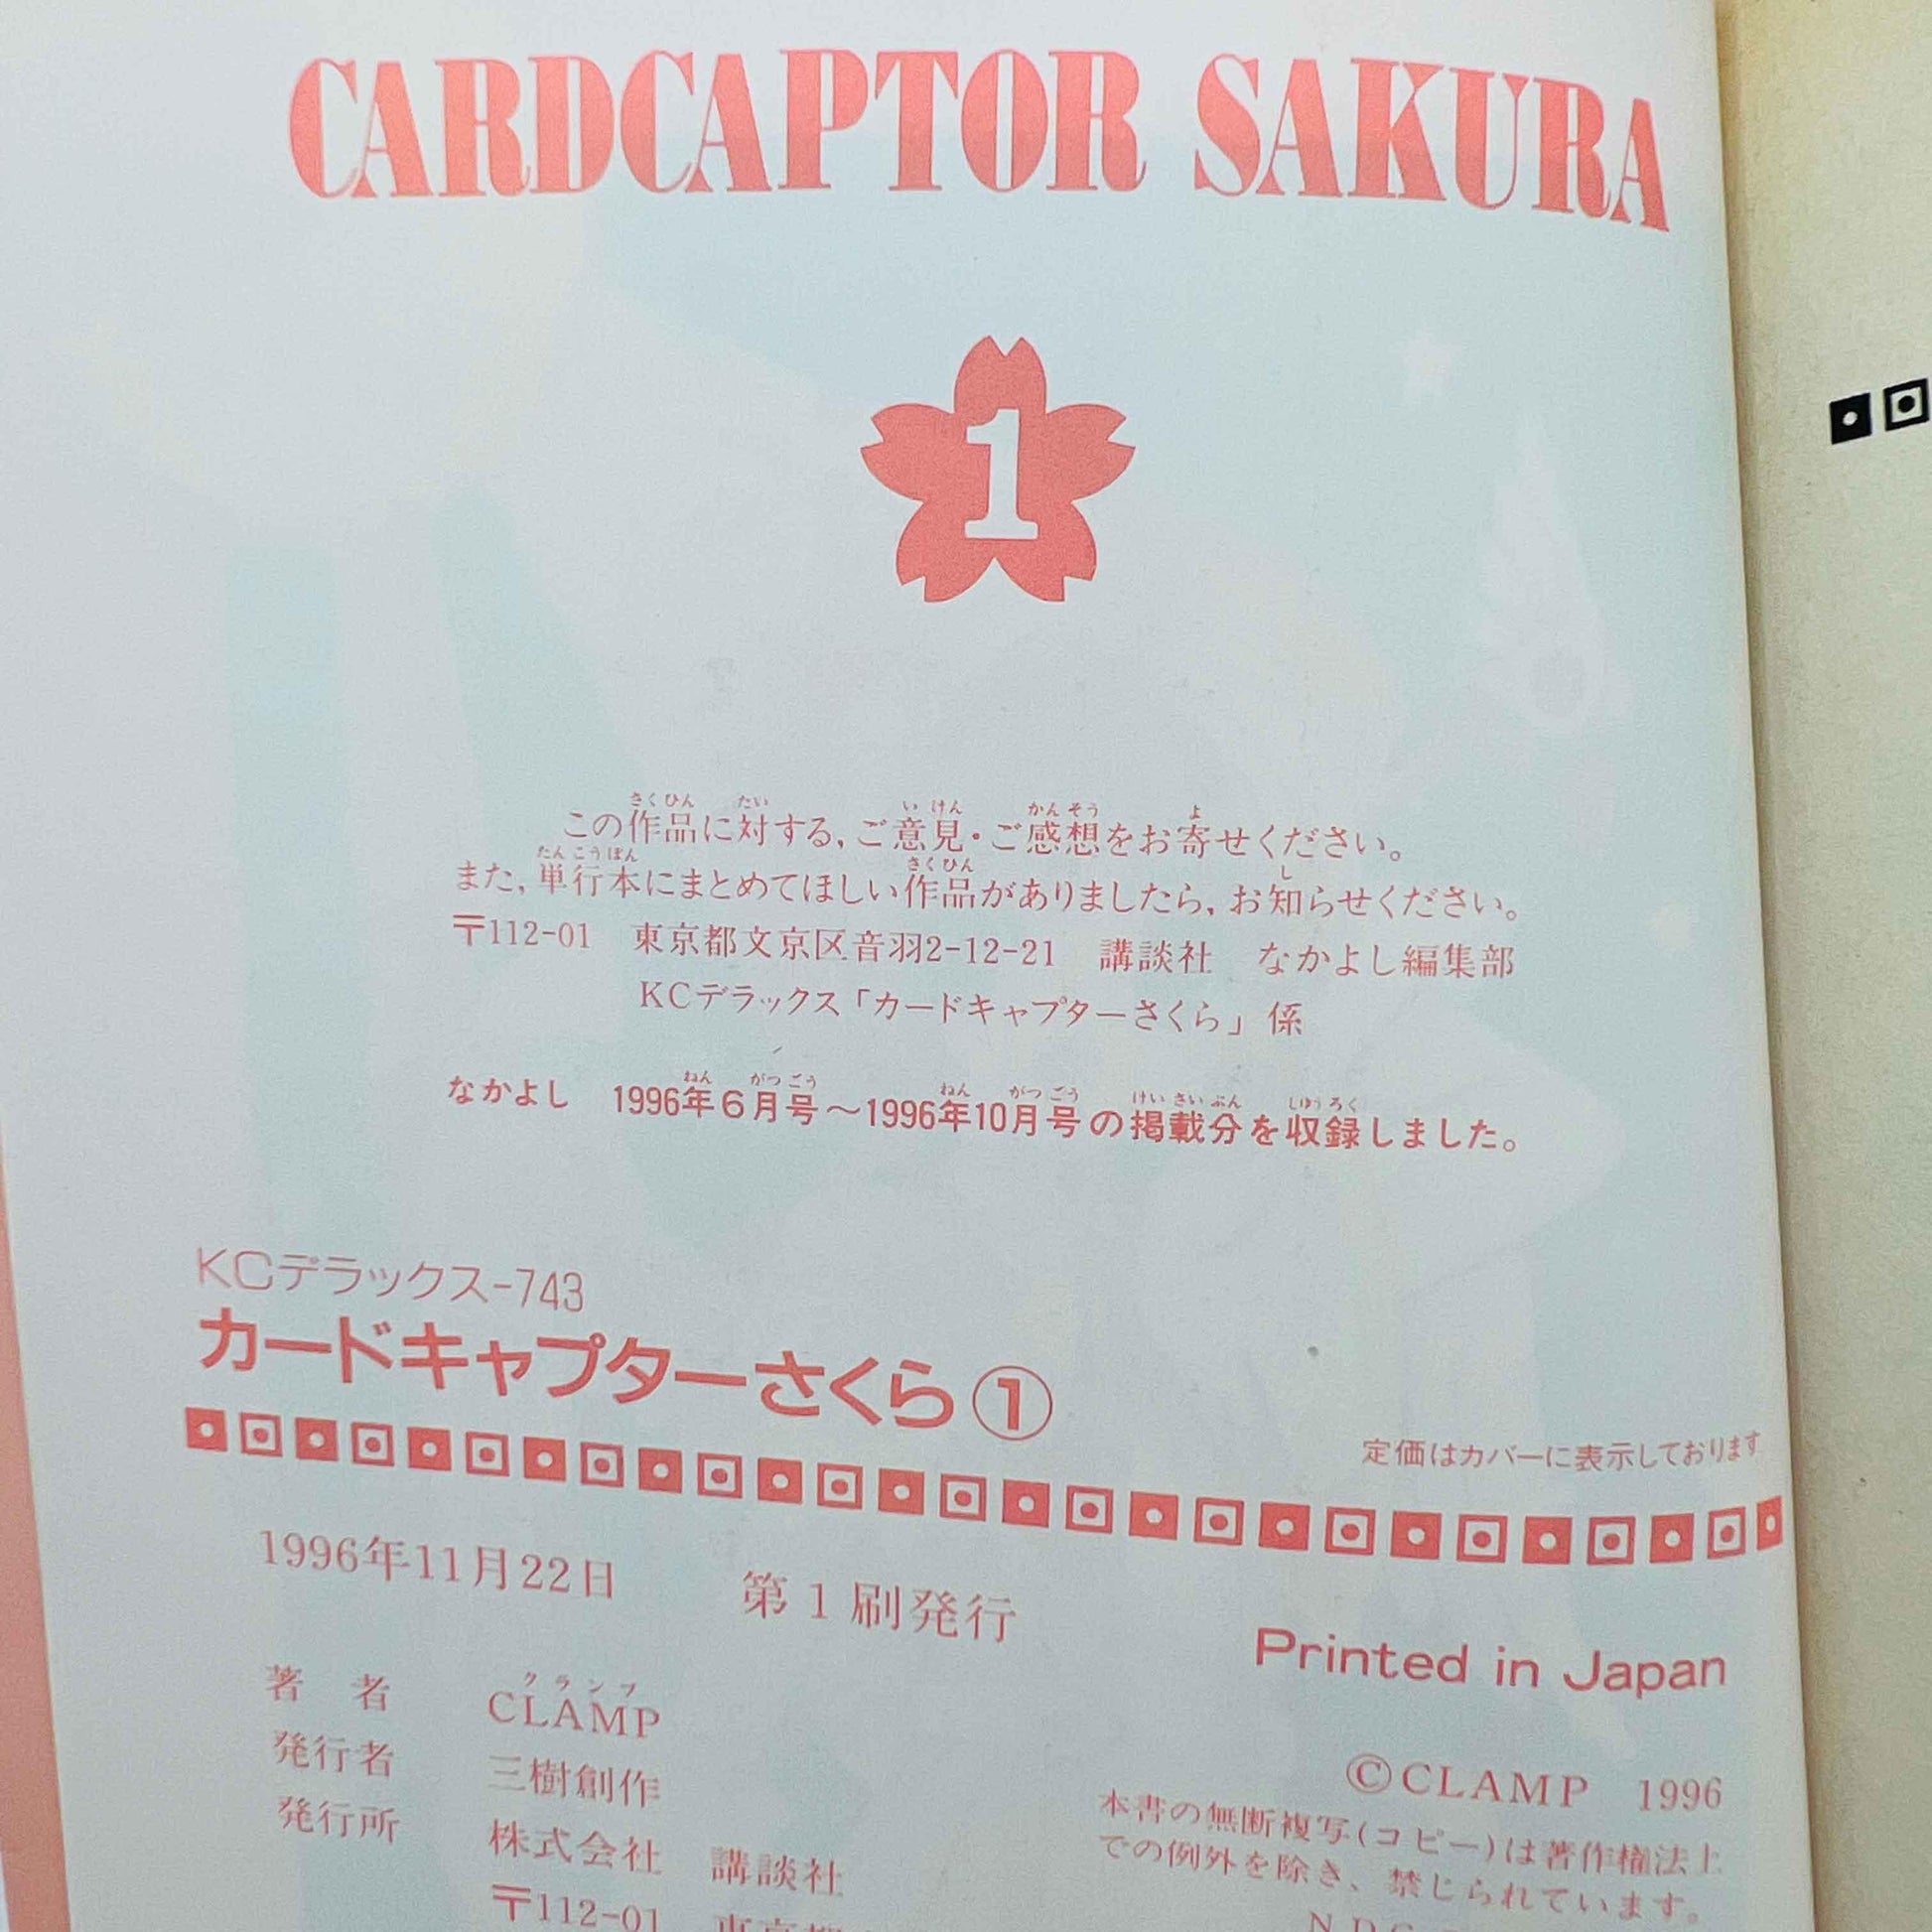 Card Captor Sakura - Volume 01 - 1stPrint.net - 1st First Print Edition Manga Store - M-SAKU-01-002